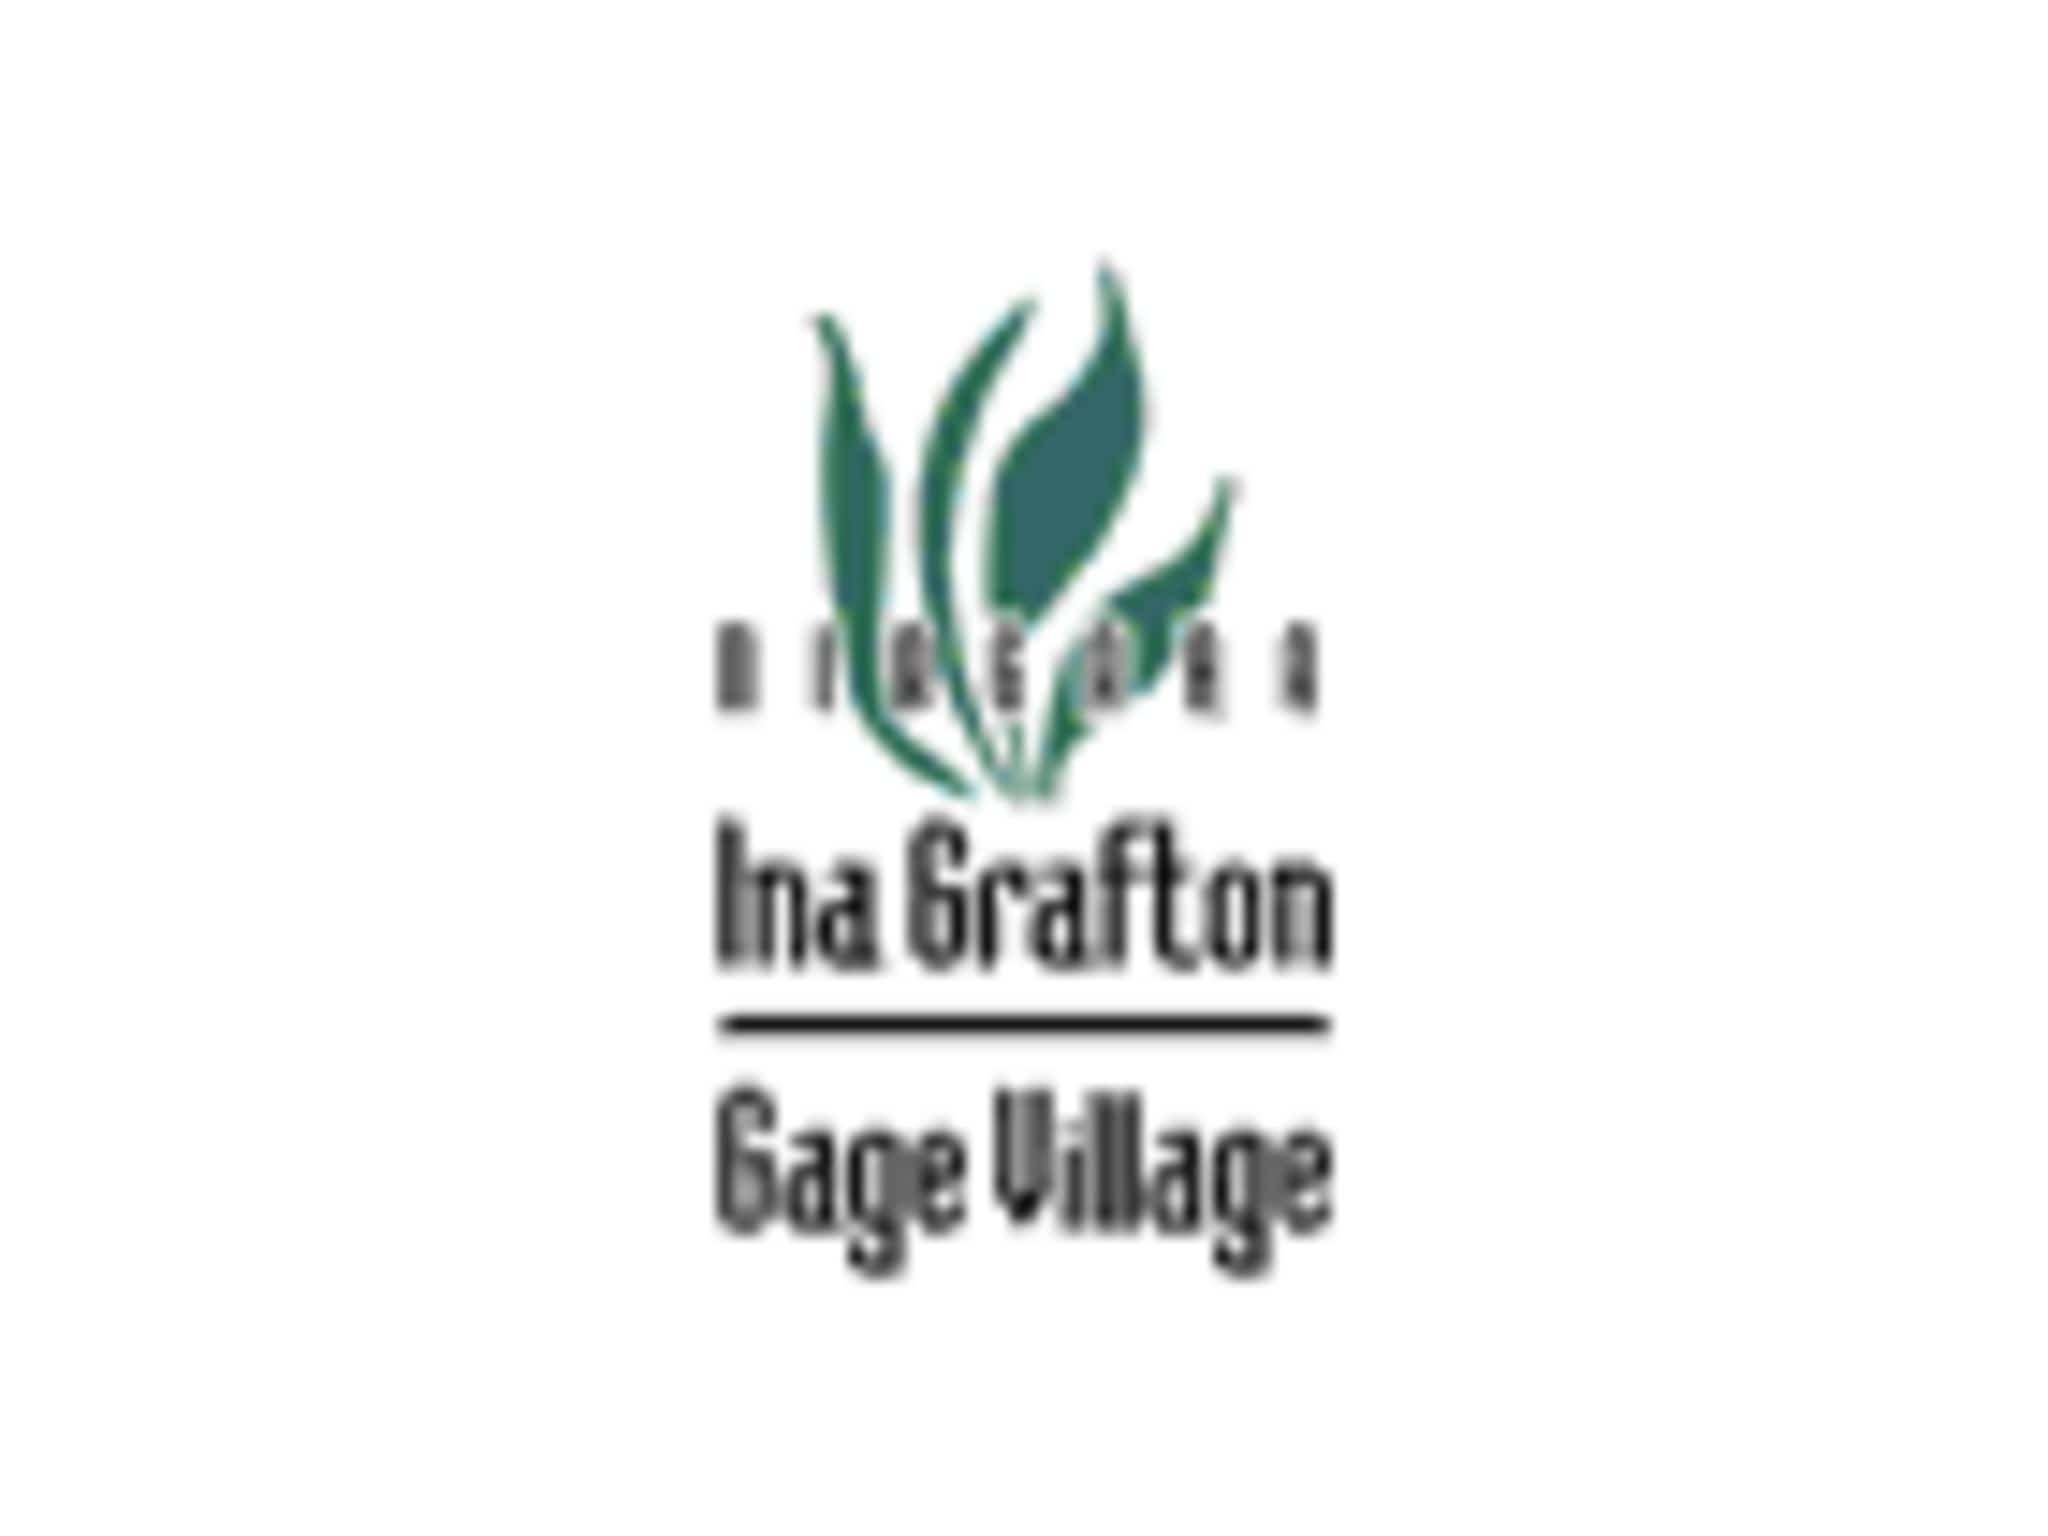 photo Niagara Ina Grafton Gage Village